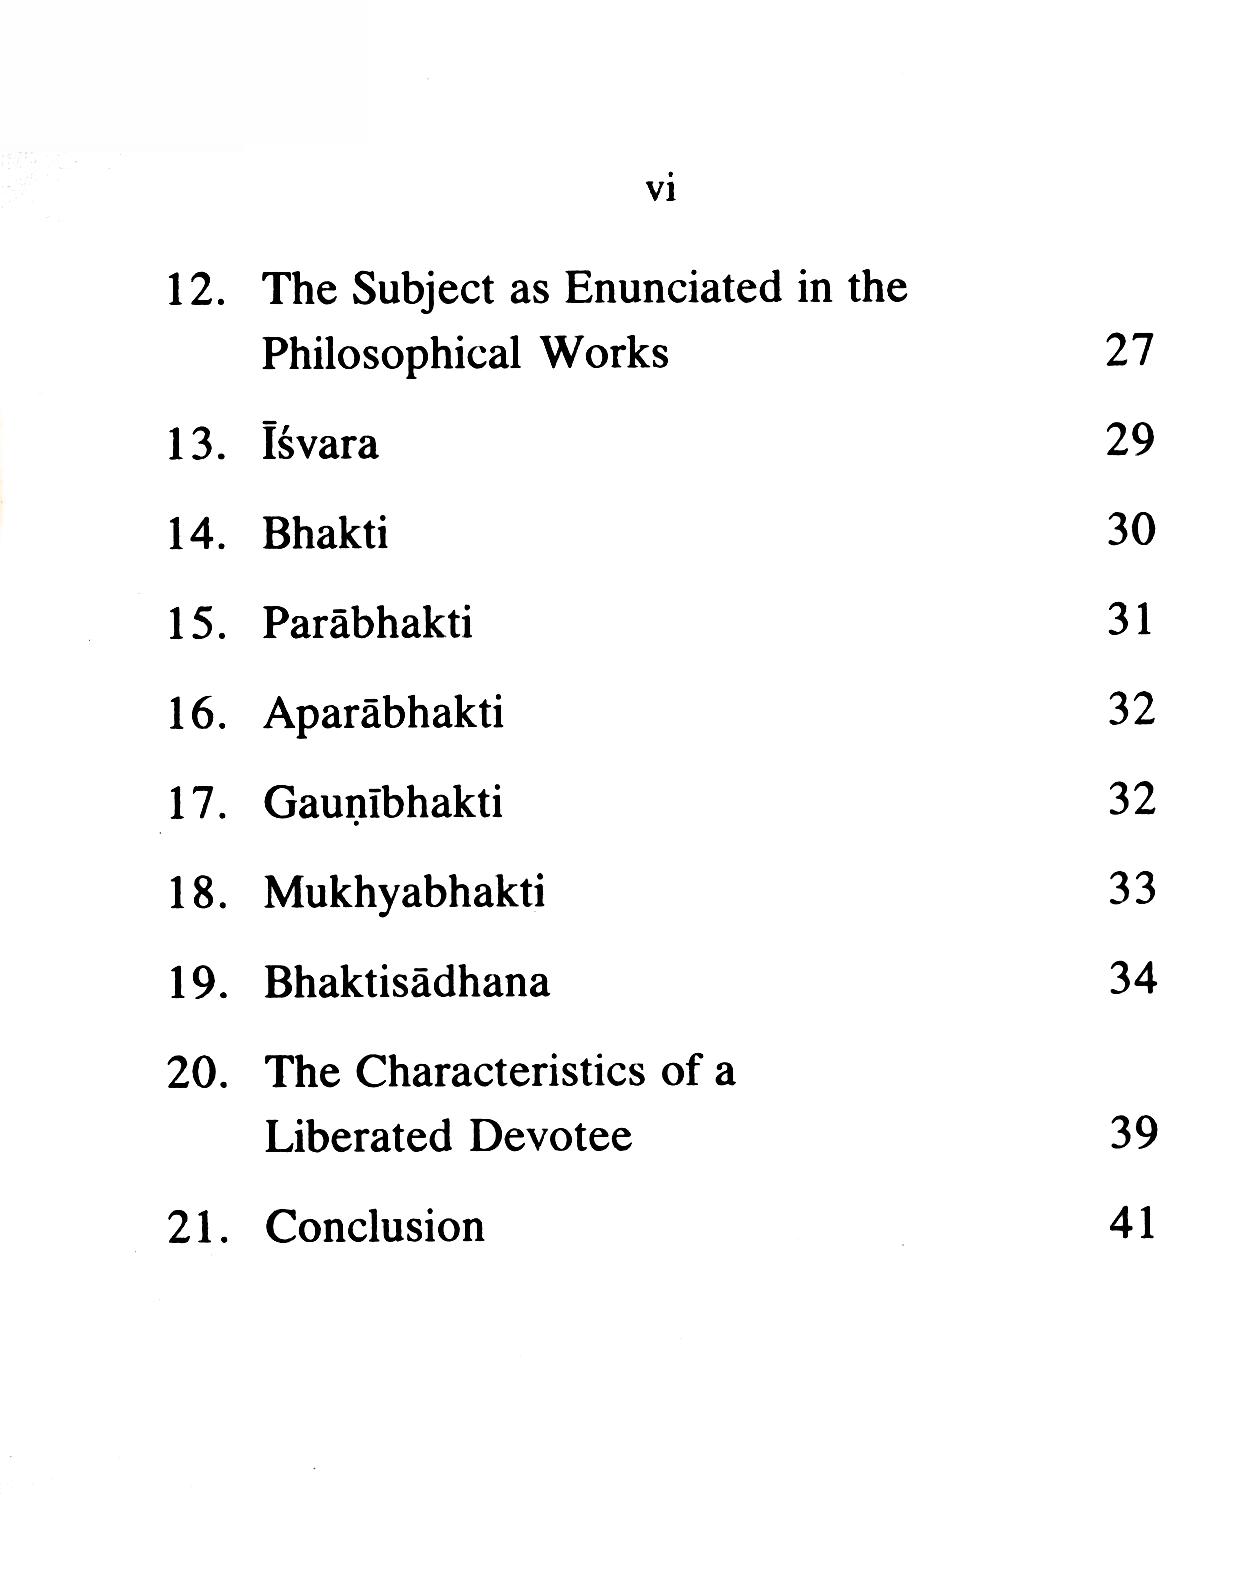 Narada Bhakti Sutras - A Study